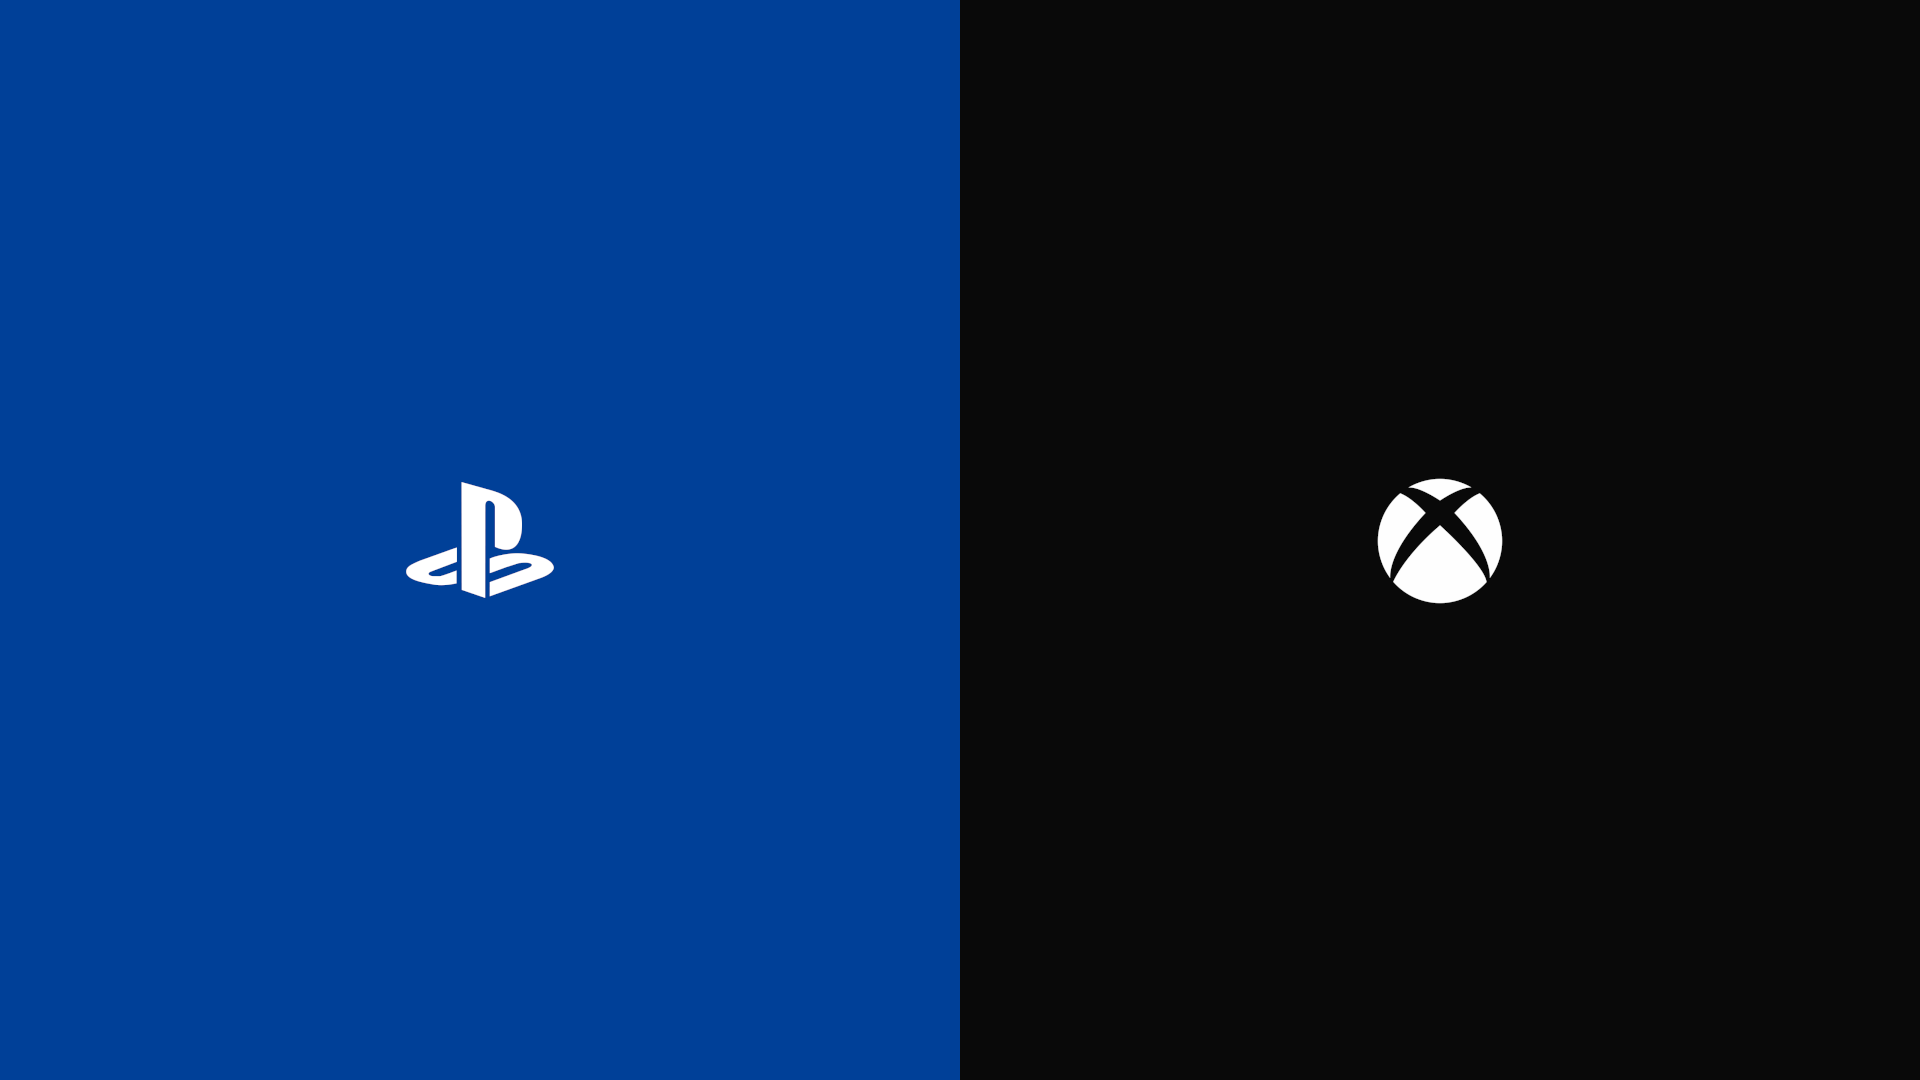 PlayStation VS XBOX